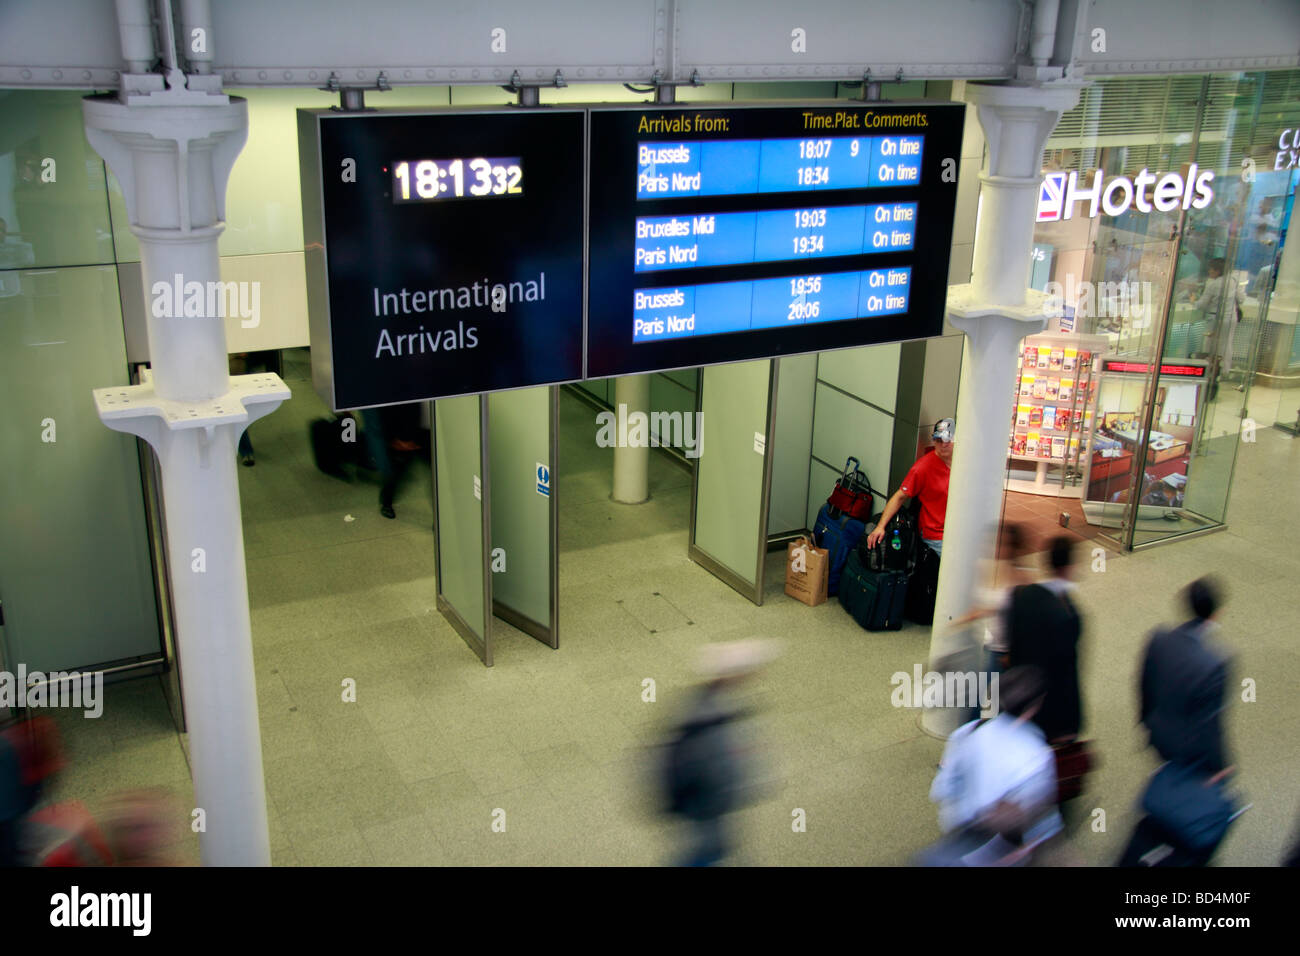 Passengers exit the International arrivals area of the Eurostar terminal, St Pancras International Railway Station, London, UK. Stock Photo